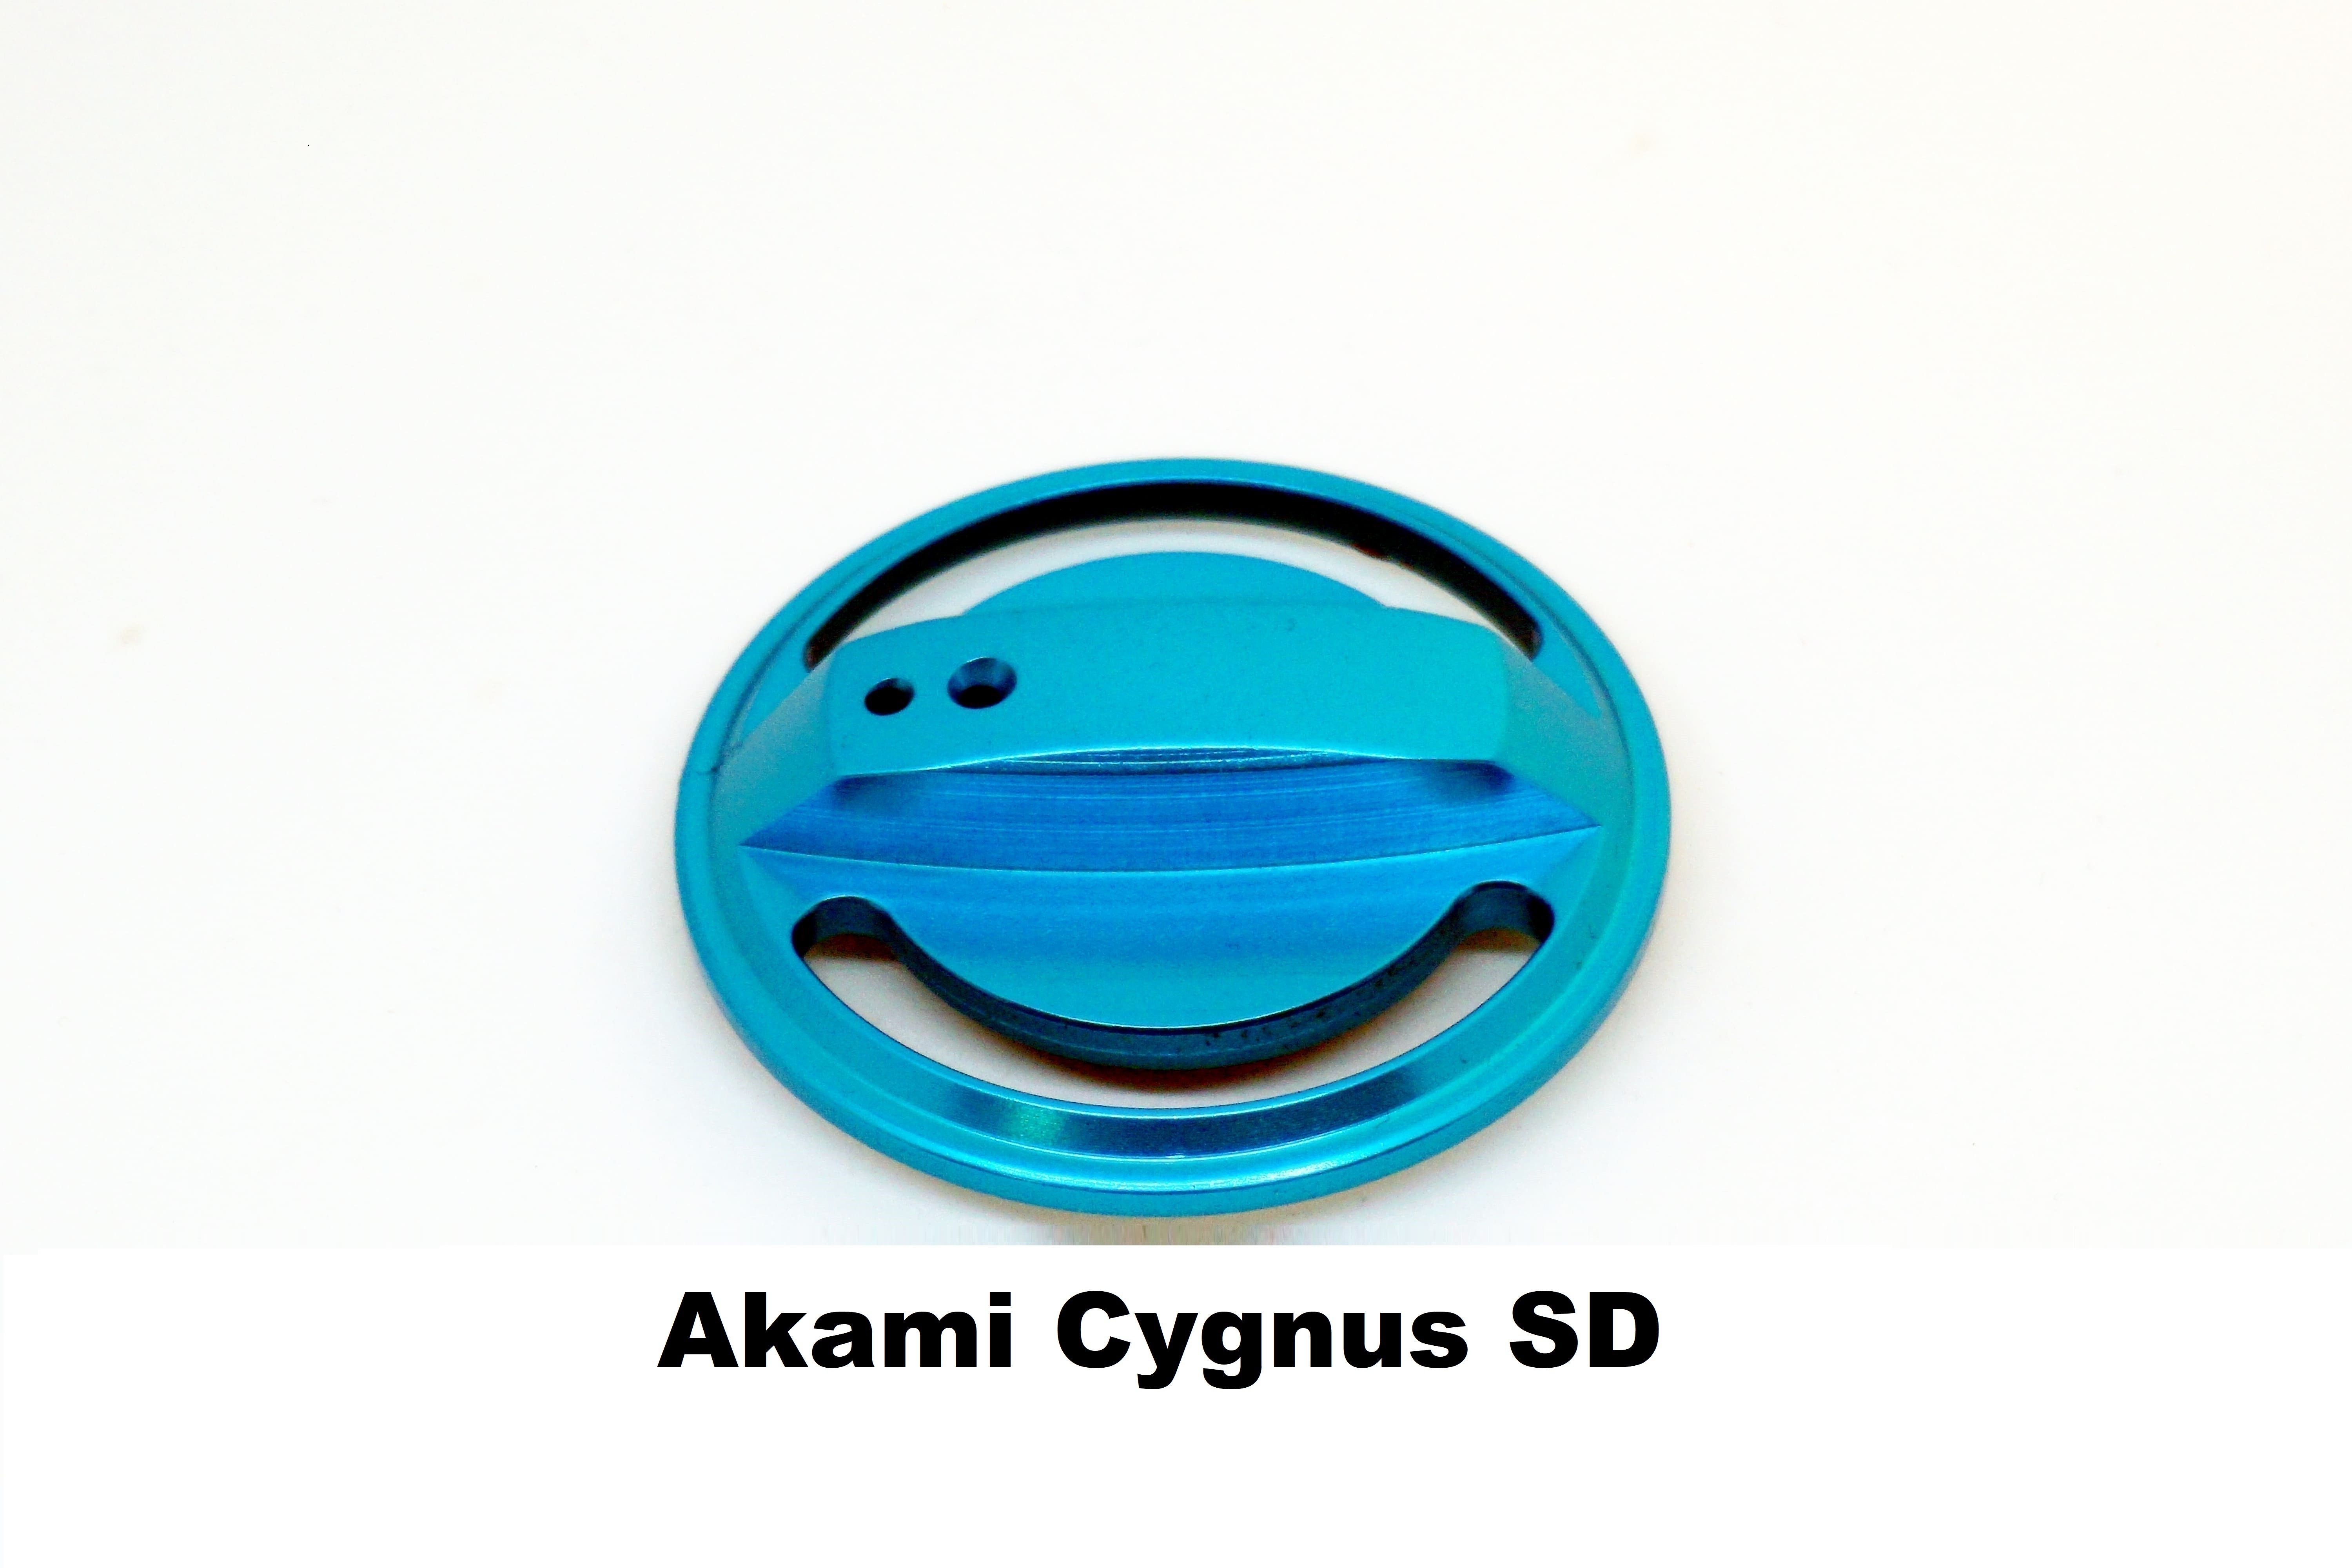 Drag Knob for Akami Cygnus SD